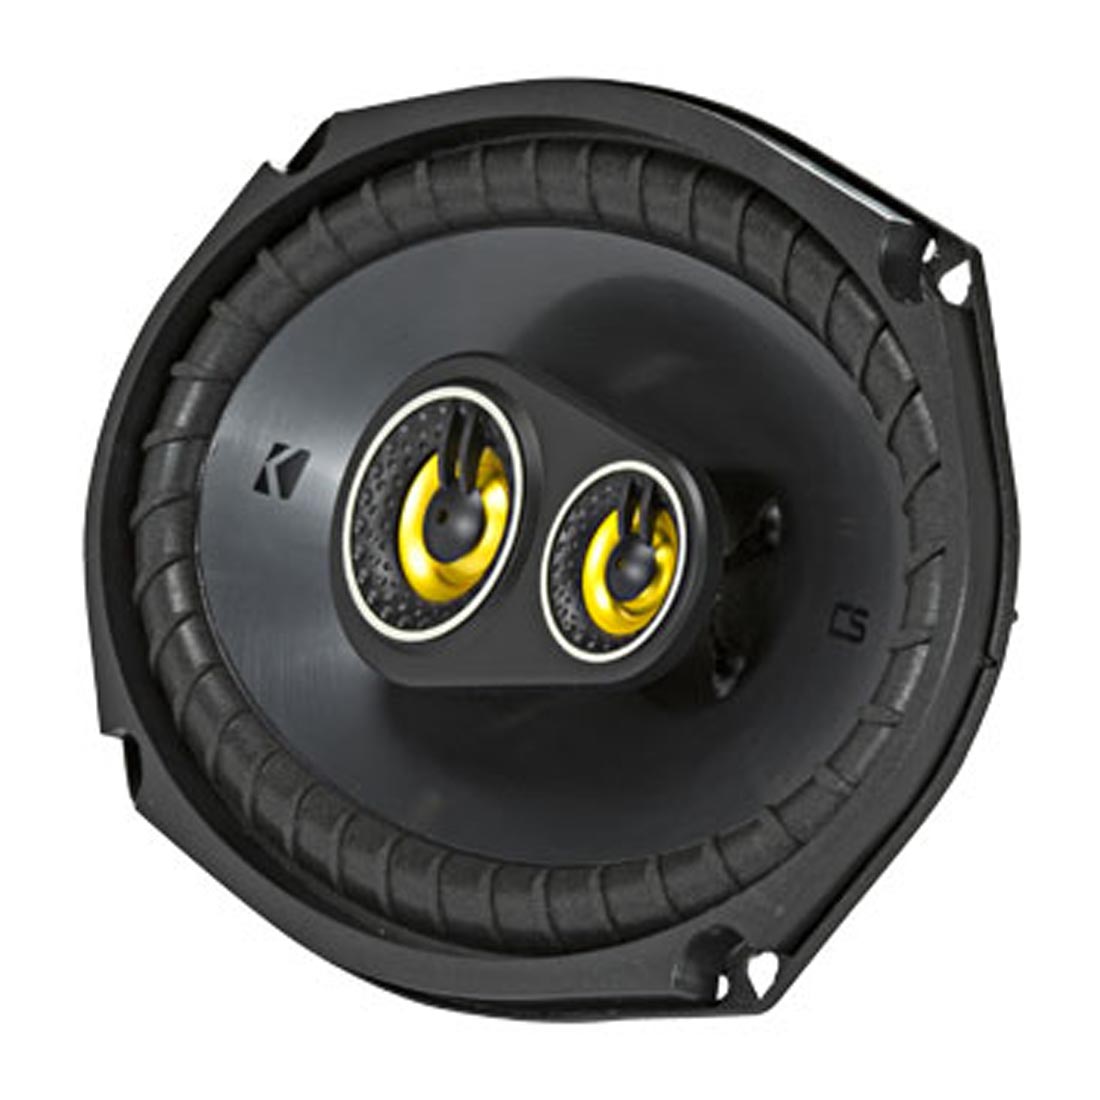 Kicker 46CSC6934 CS Series 6"x9" 3-way 4-Ohm Coaxial Car Speakers